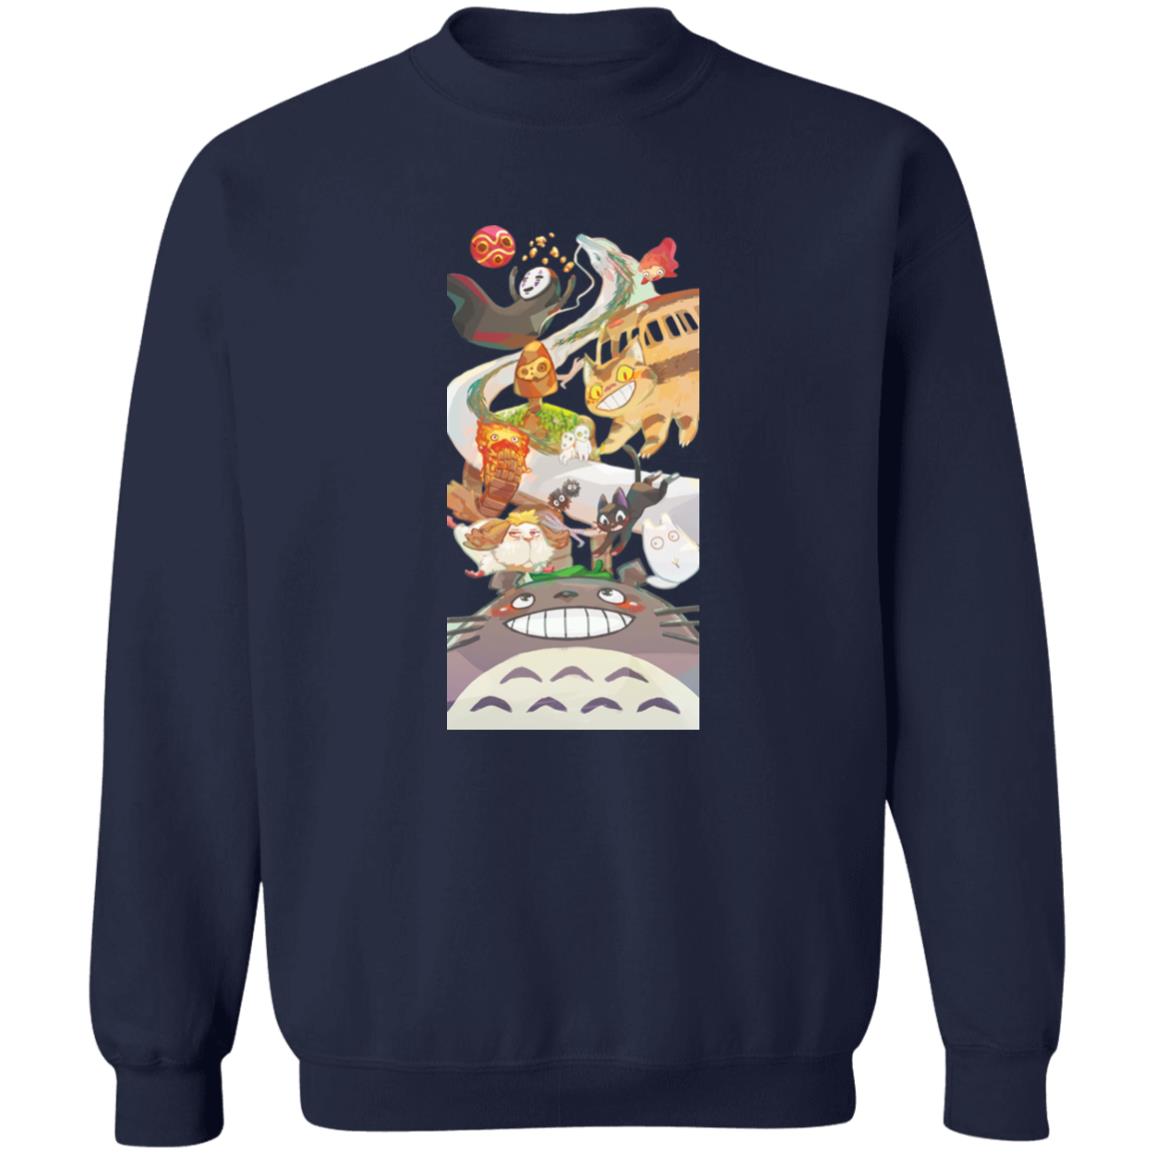 Totoro and Ghibli Friends Fanart Sweatshirt